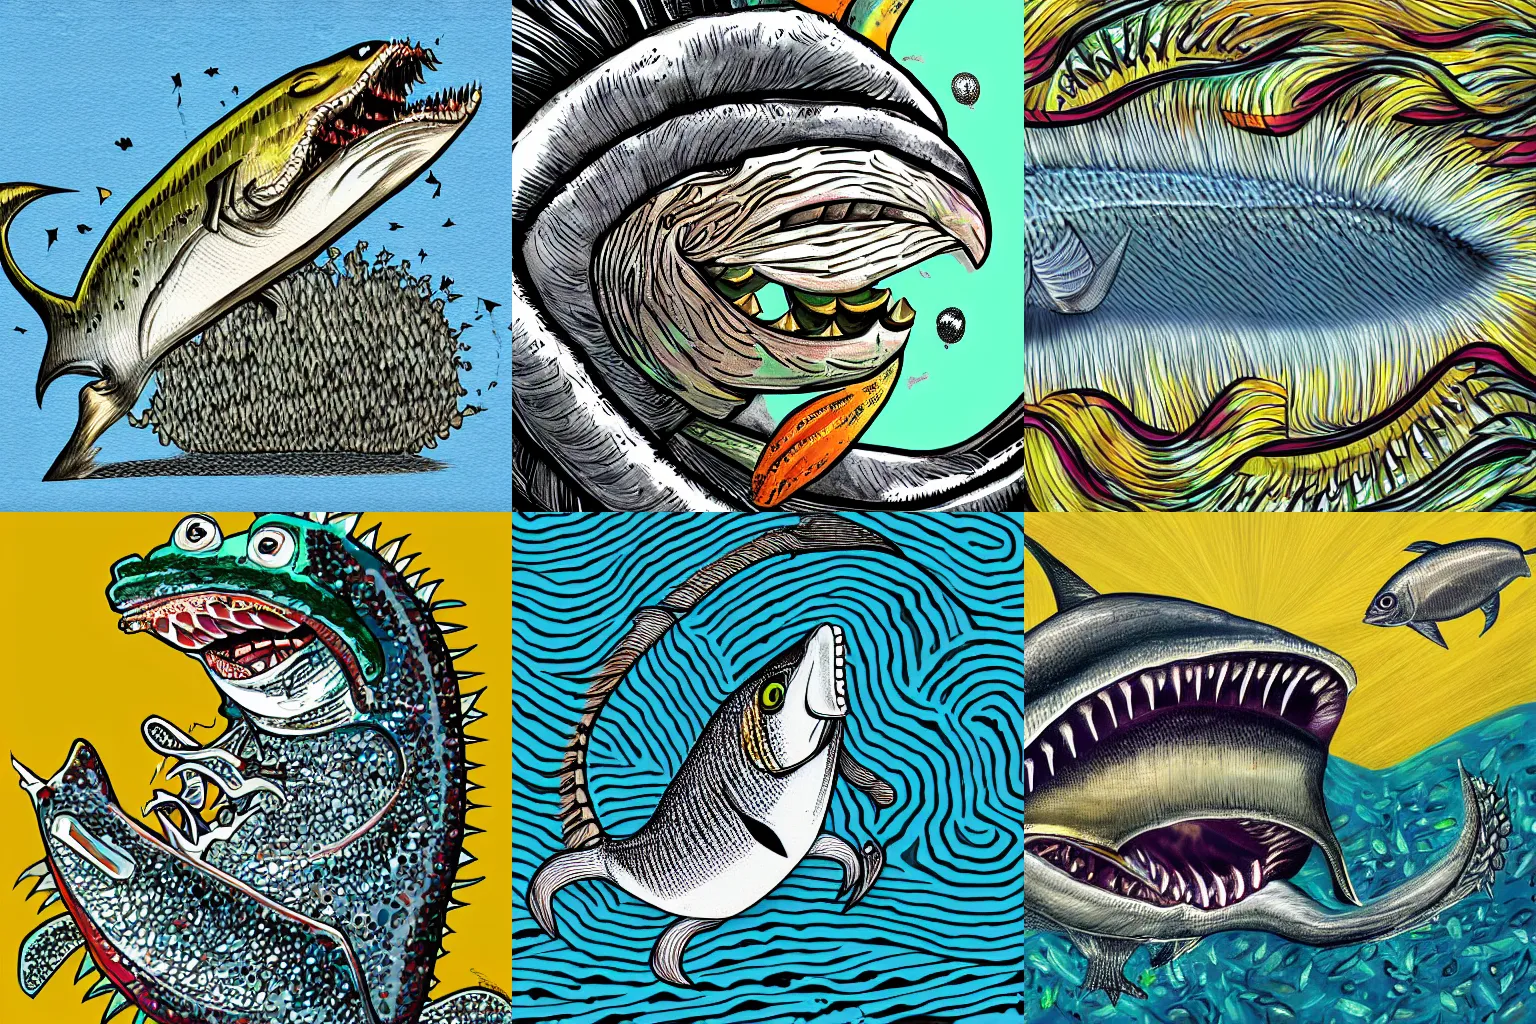 Prompt: a sardine monster, chomping fish, digital art